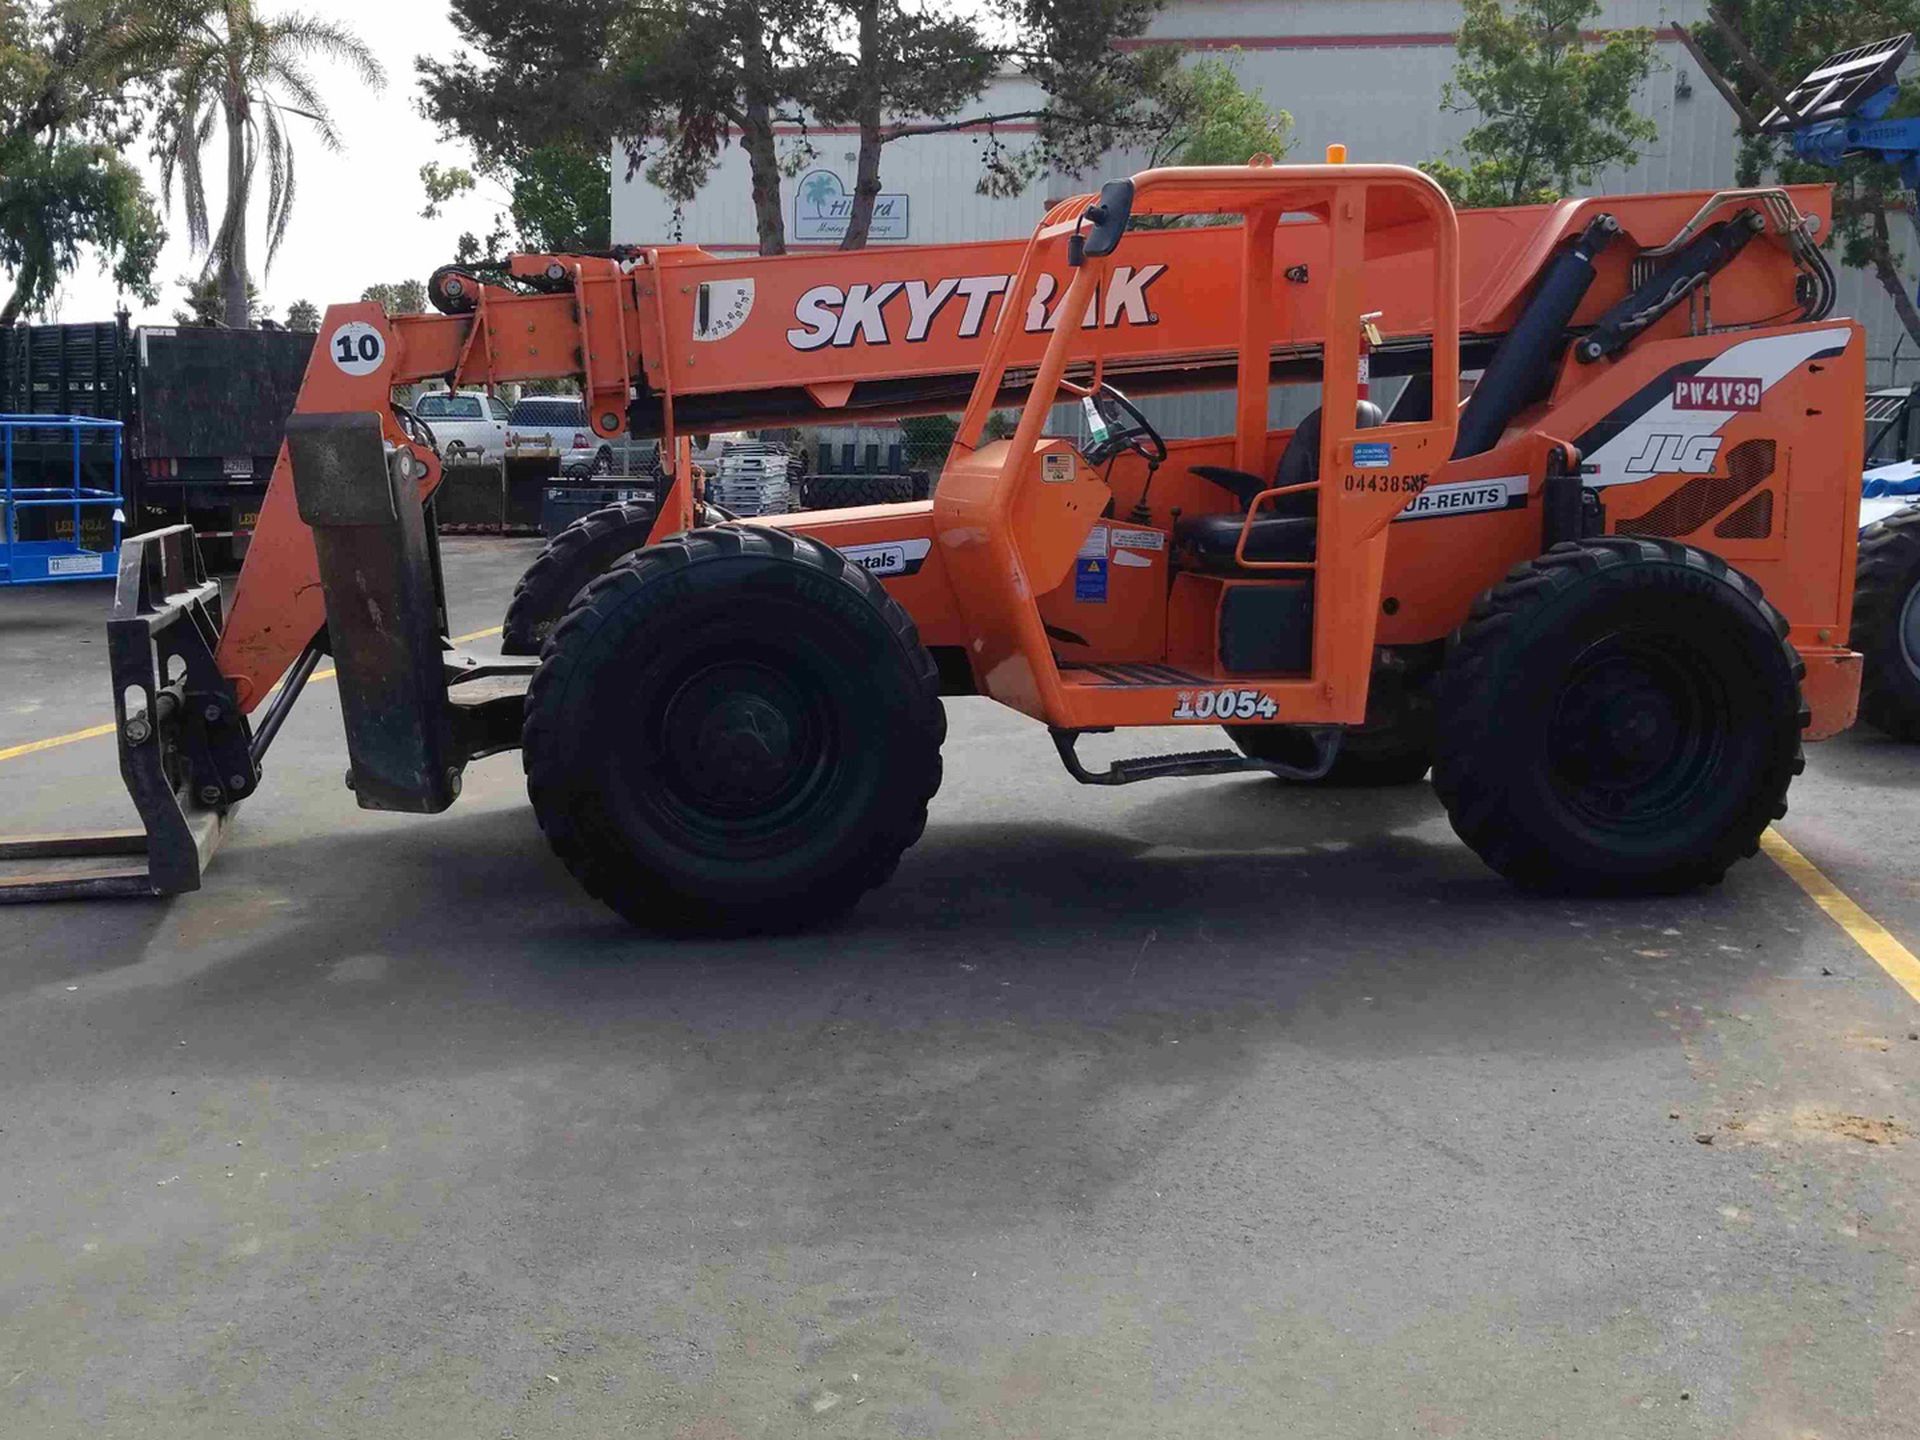 Forklift Reach Skytrak